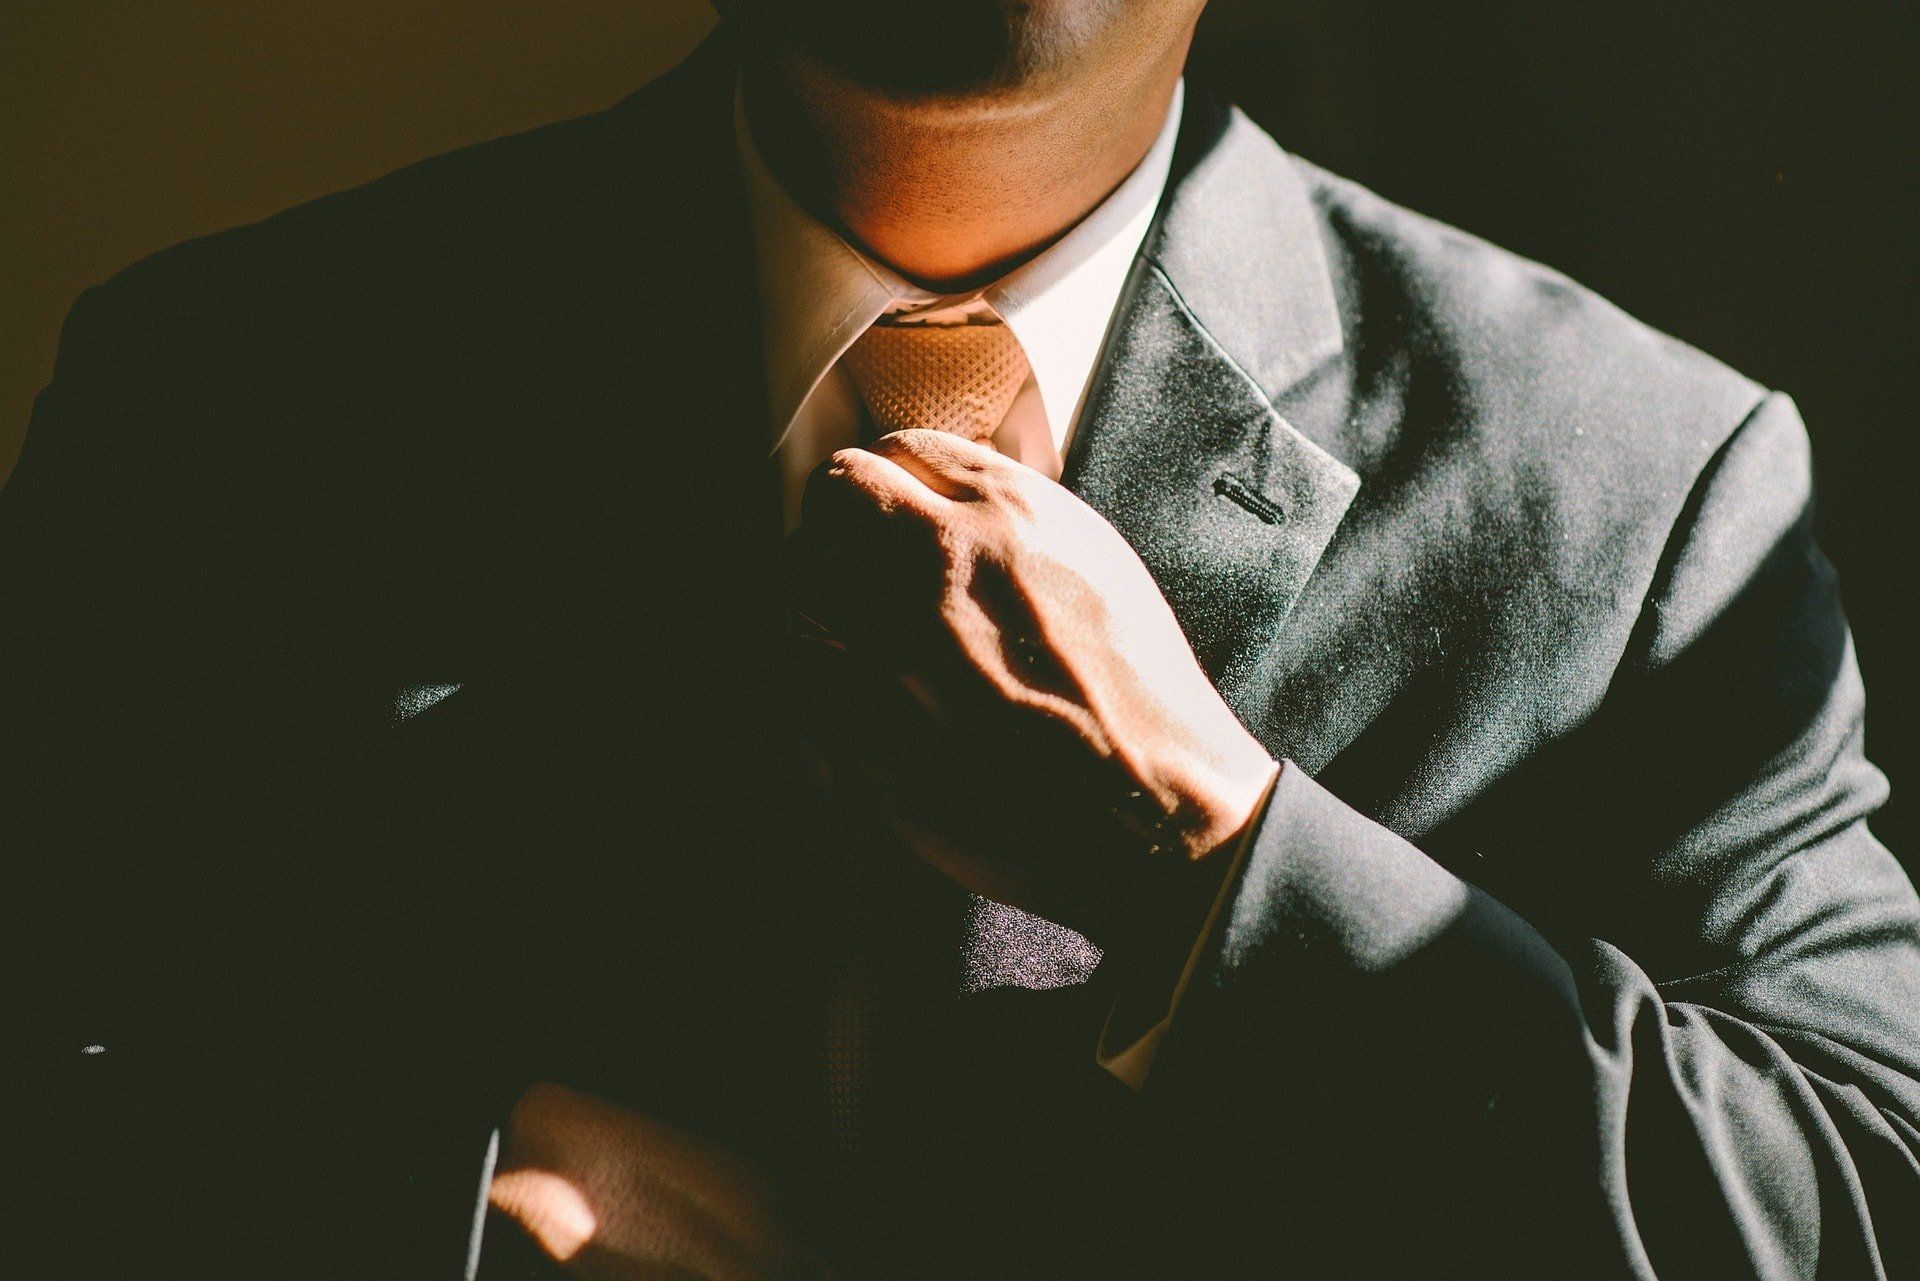 funeral etiquette man in business suit adjusting tie